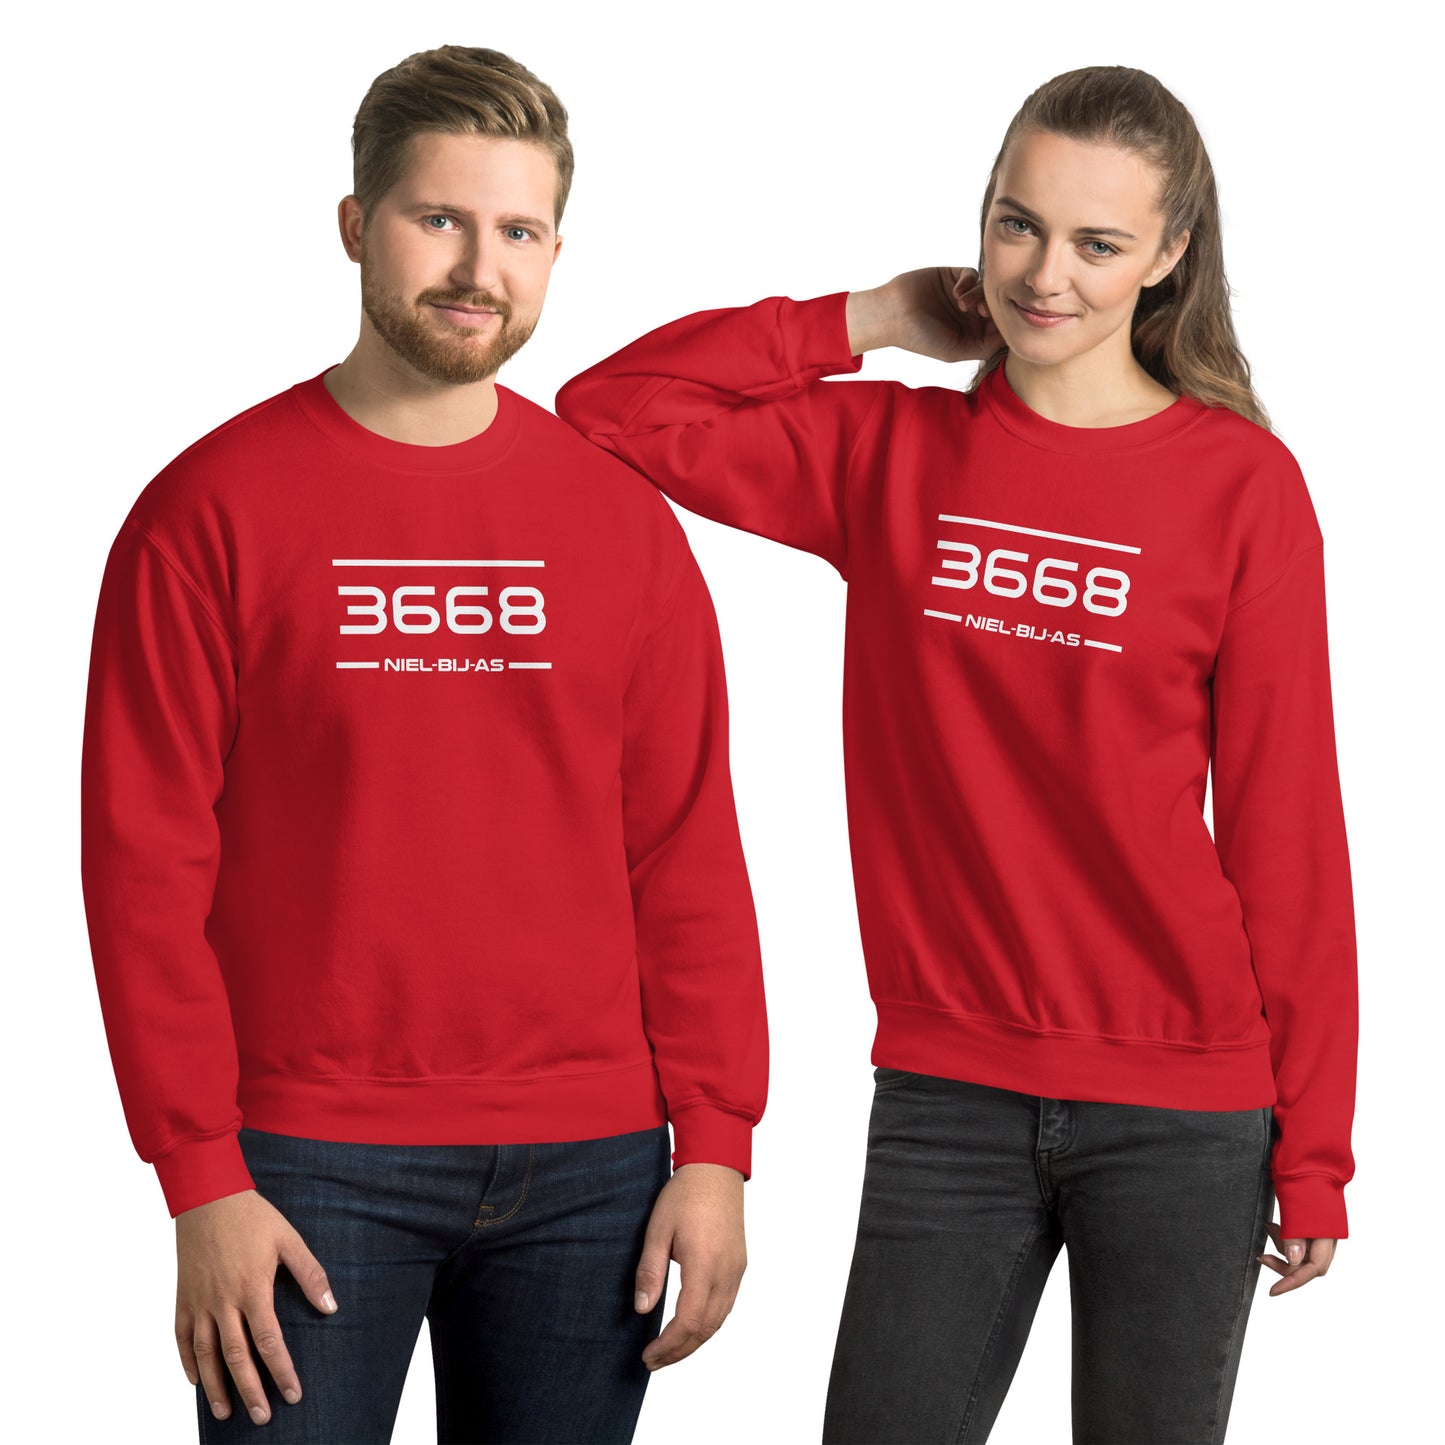 Sweater - 3668 - Niel-Bij-As (M/V)